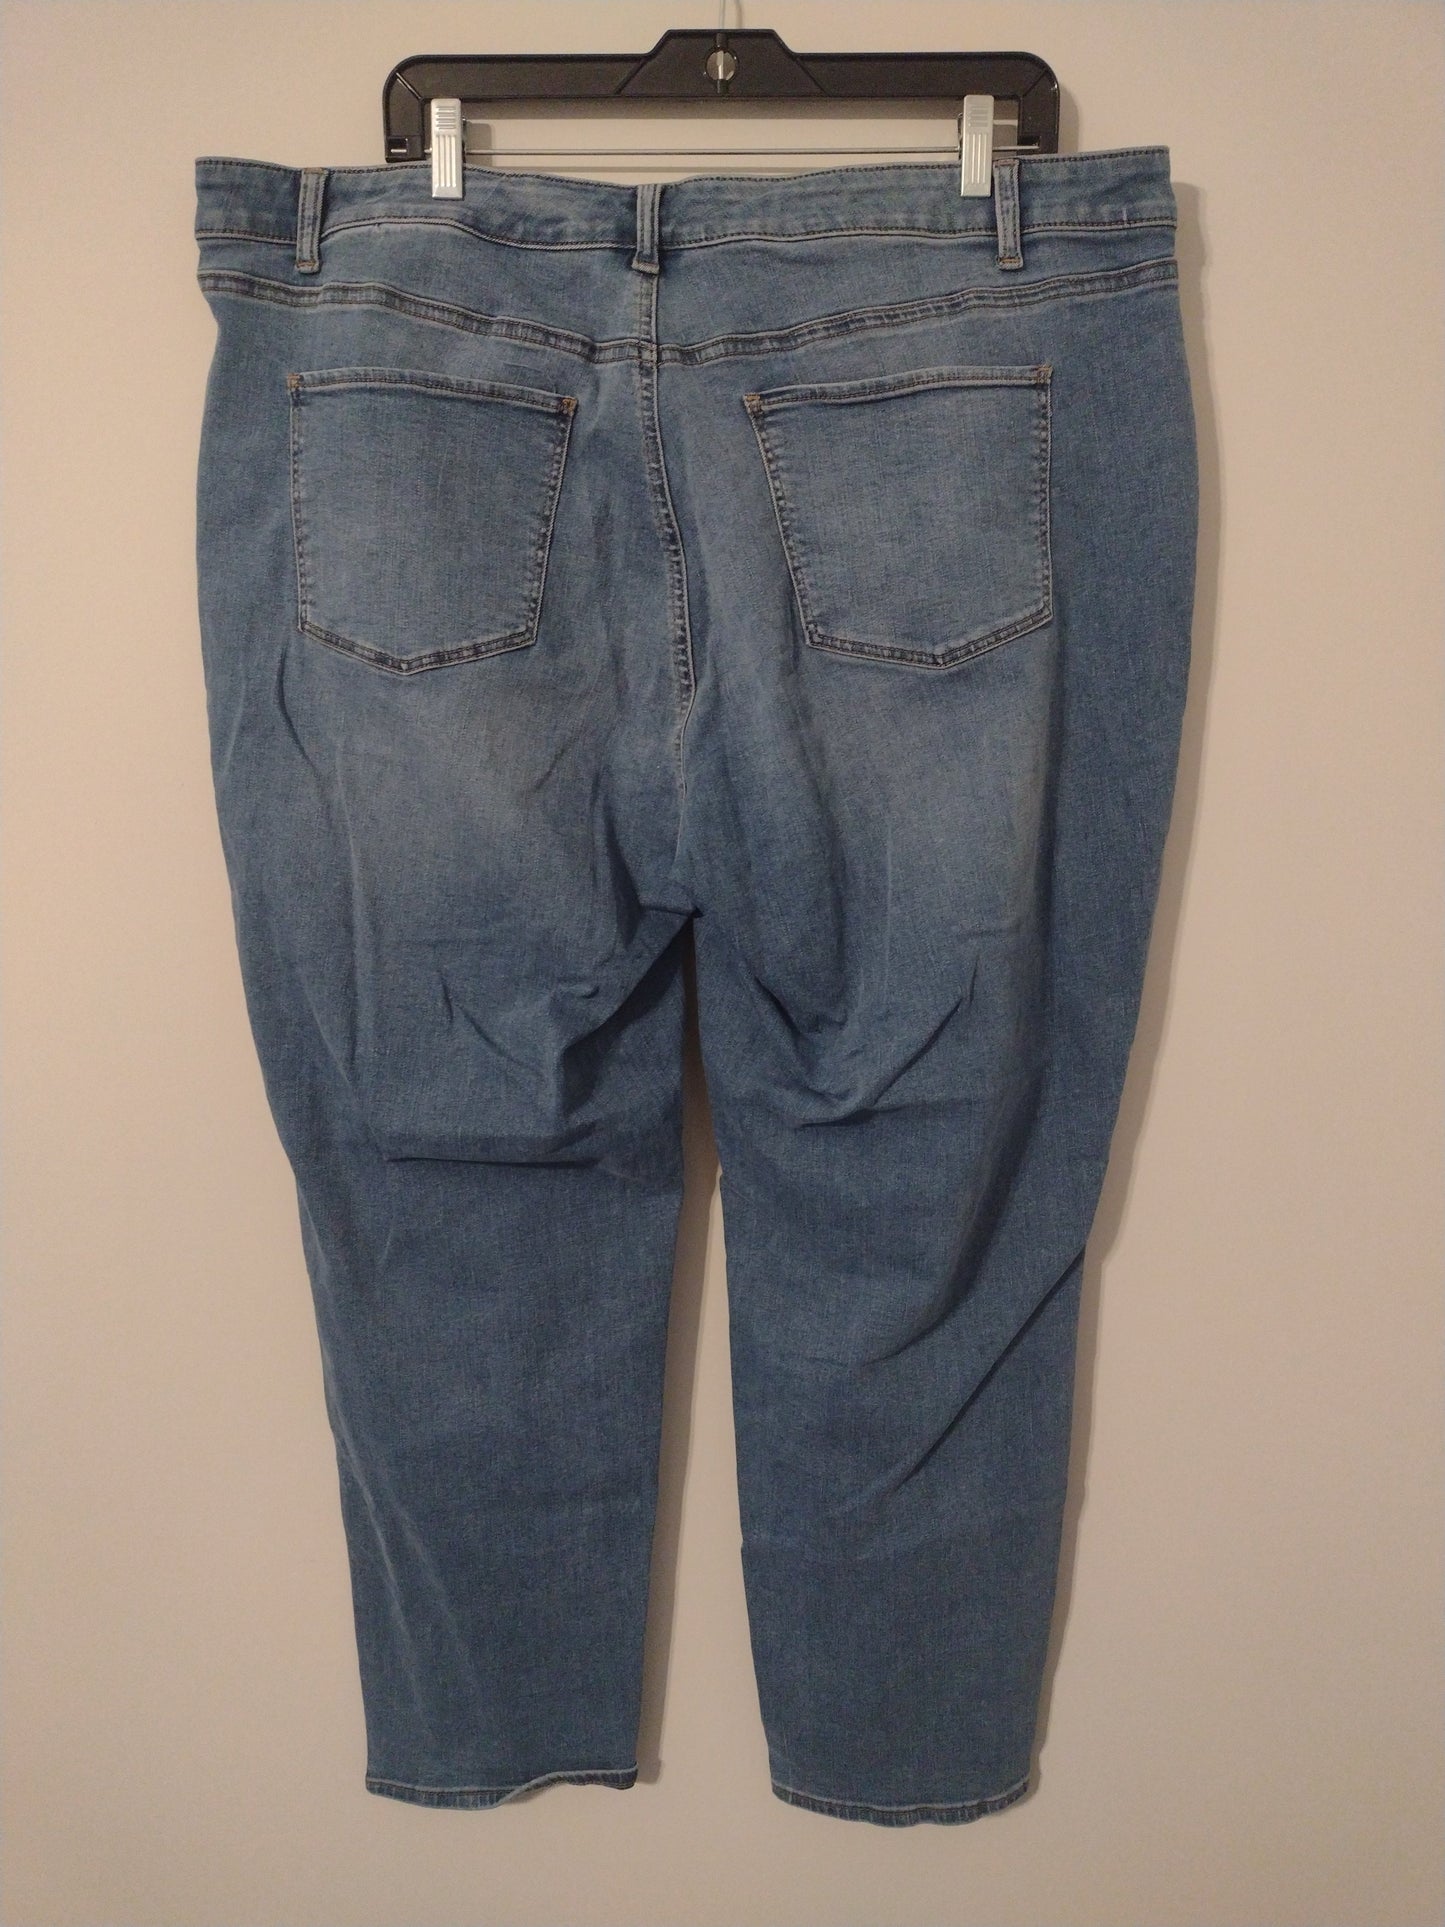 Jeans Skinny By Talbots  Size: 20